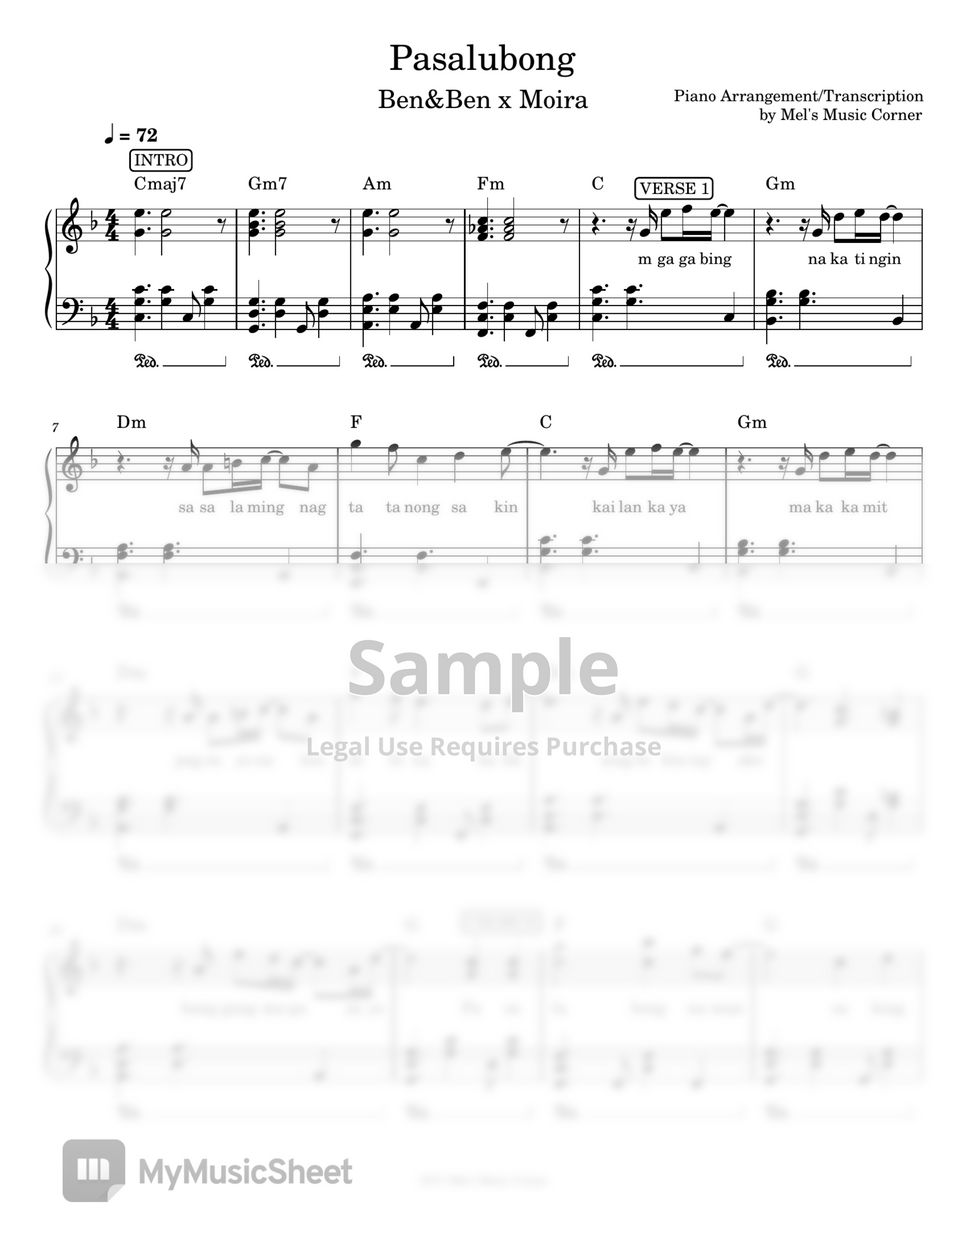 Ben&Ben and Moira - Pasalubong (piano sheet music) by Mel's Music Corner